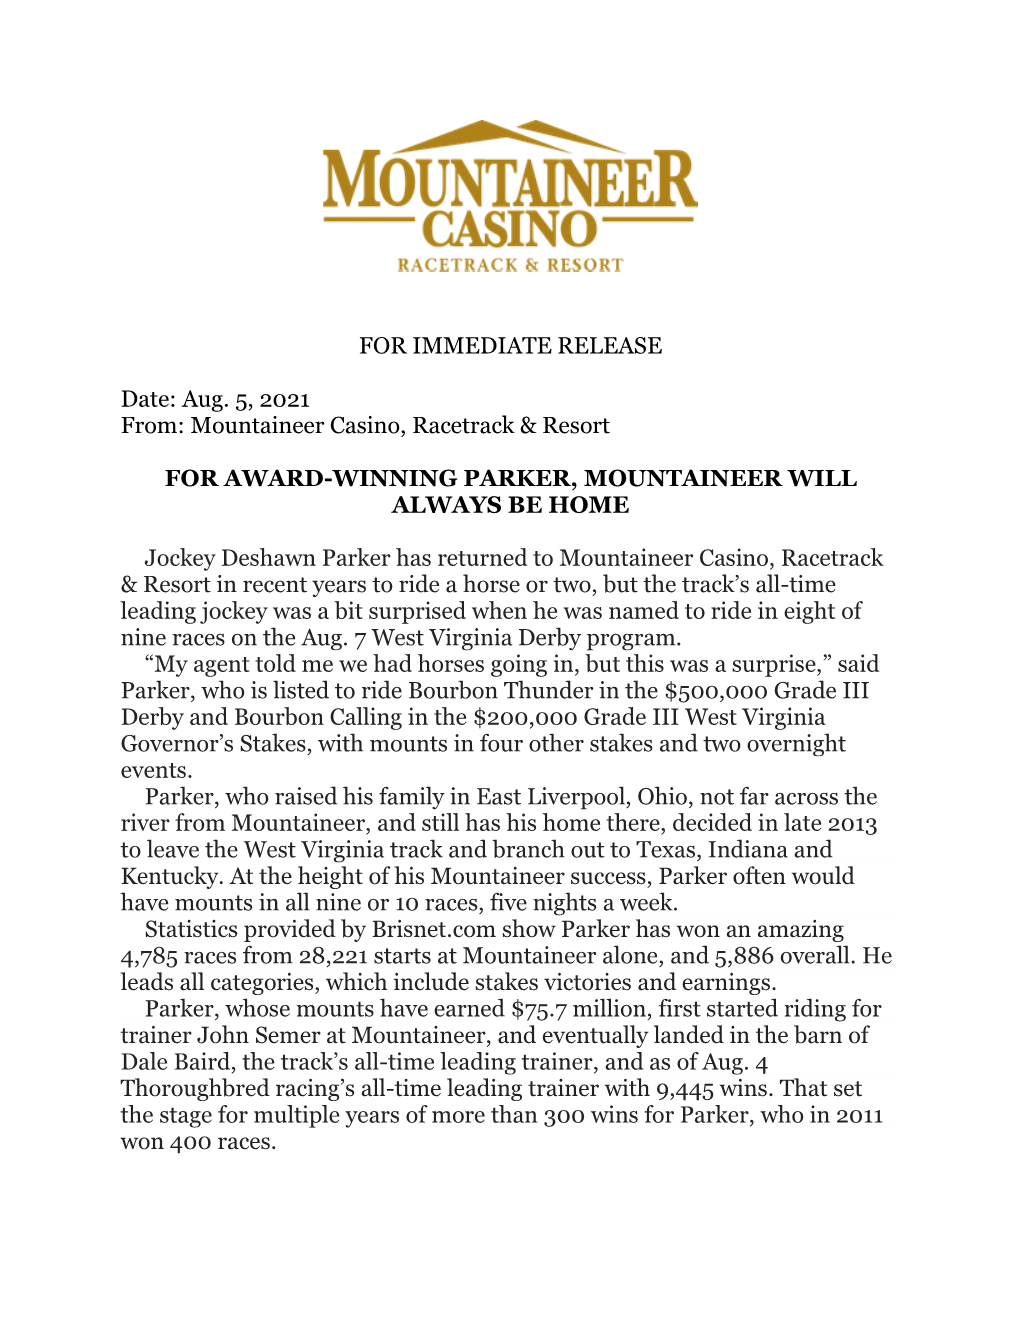 Mountaineer Casino, Racetrack & Resort for AWARD-WINNING